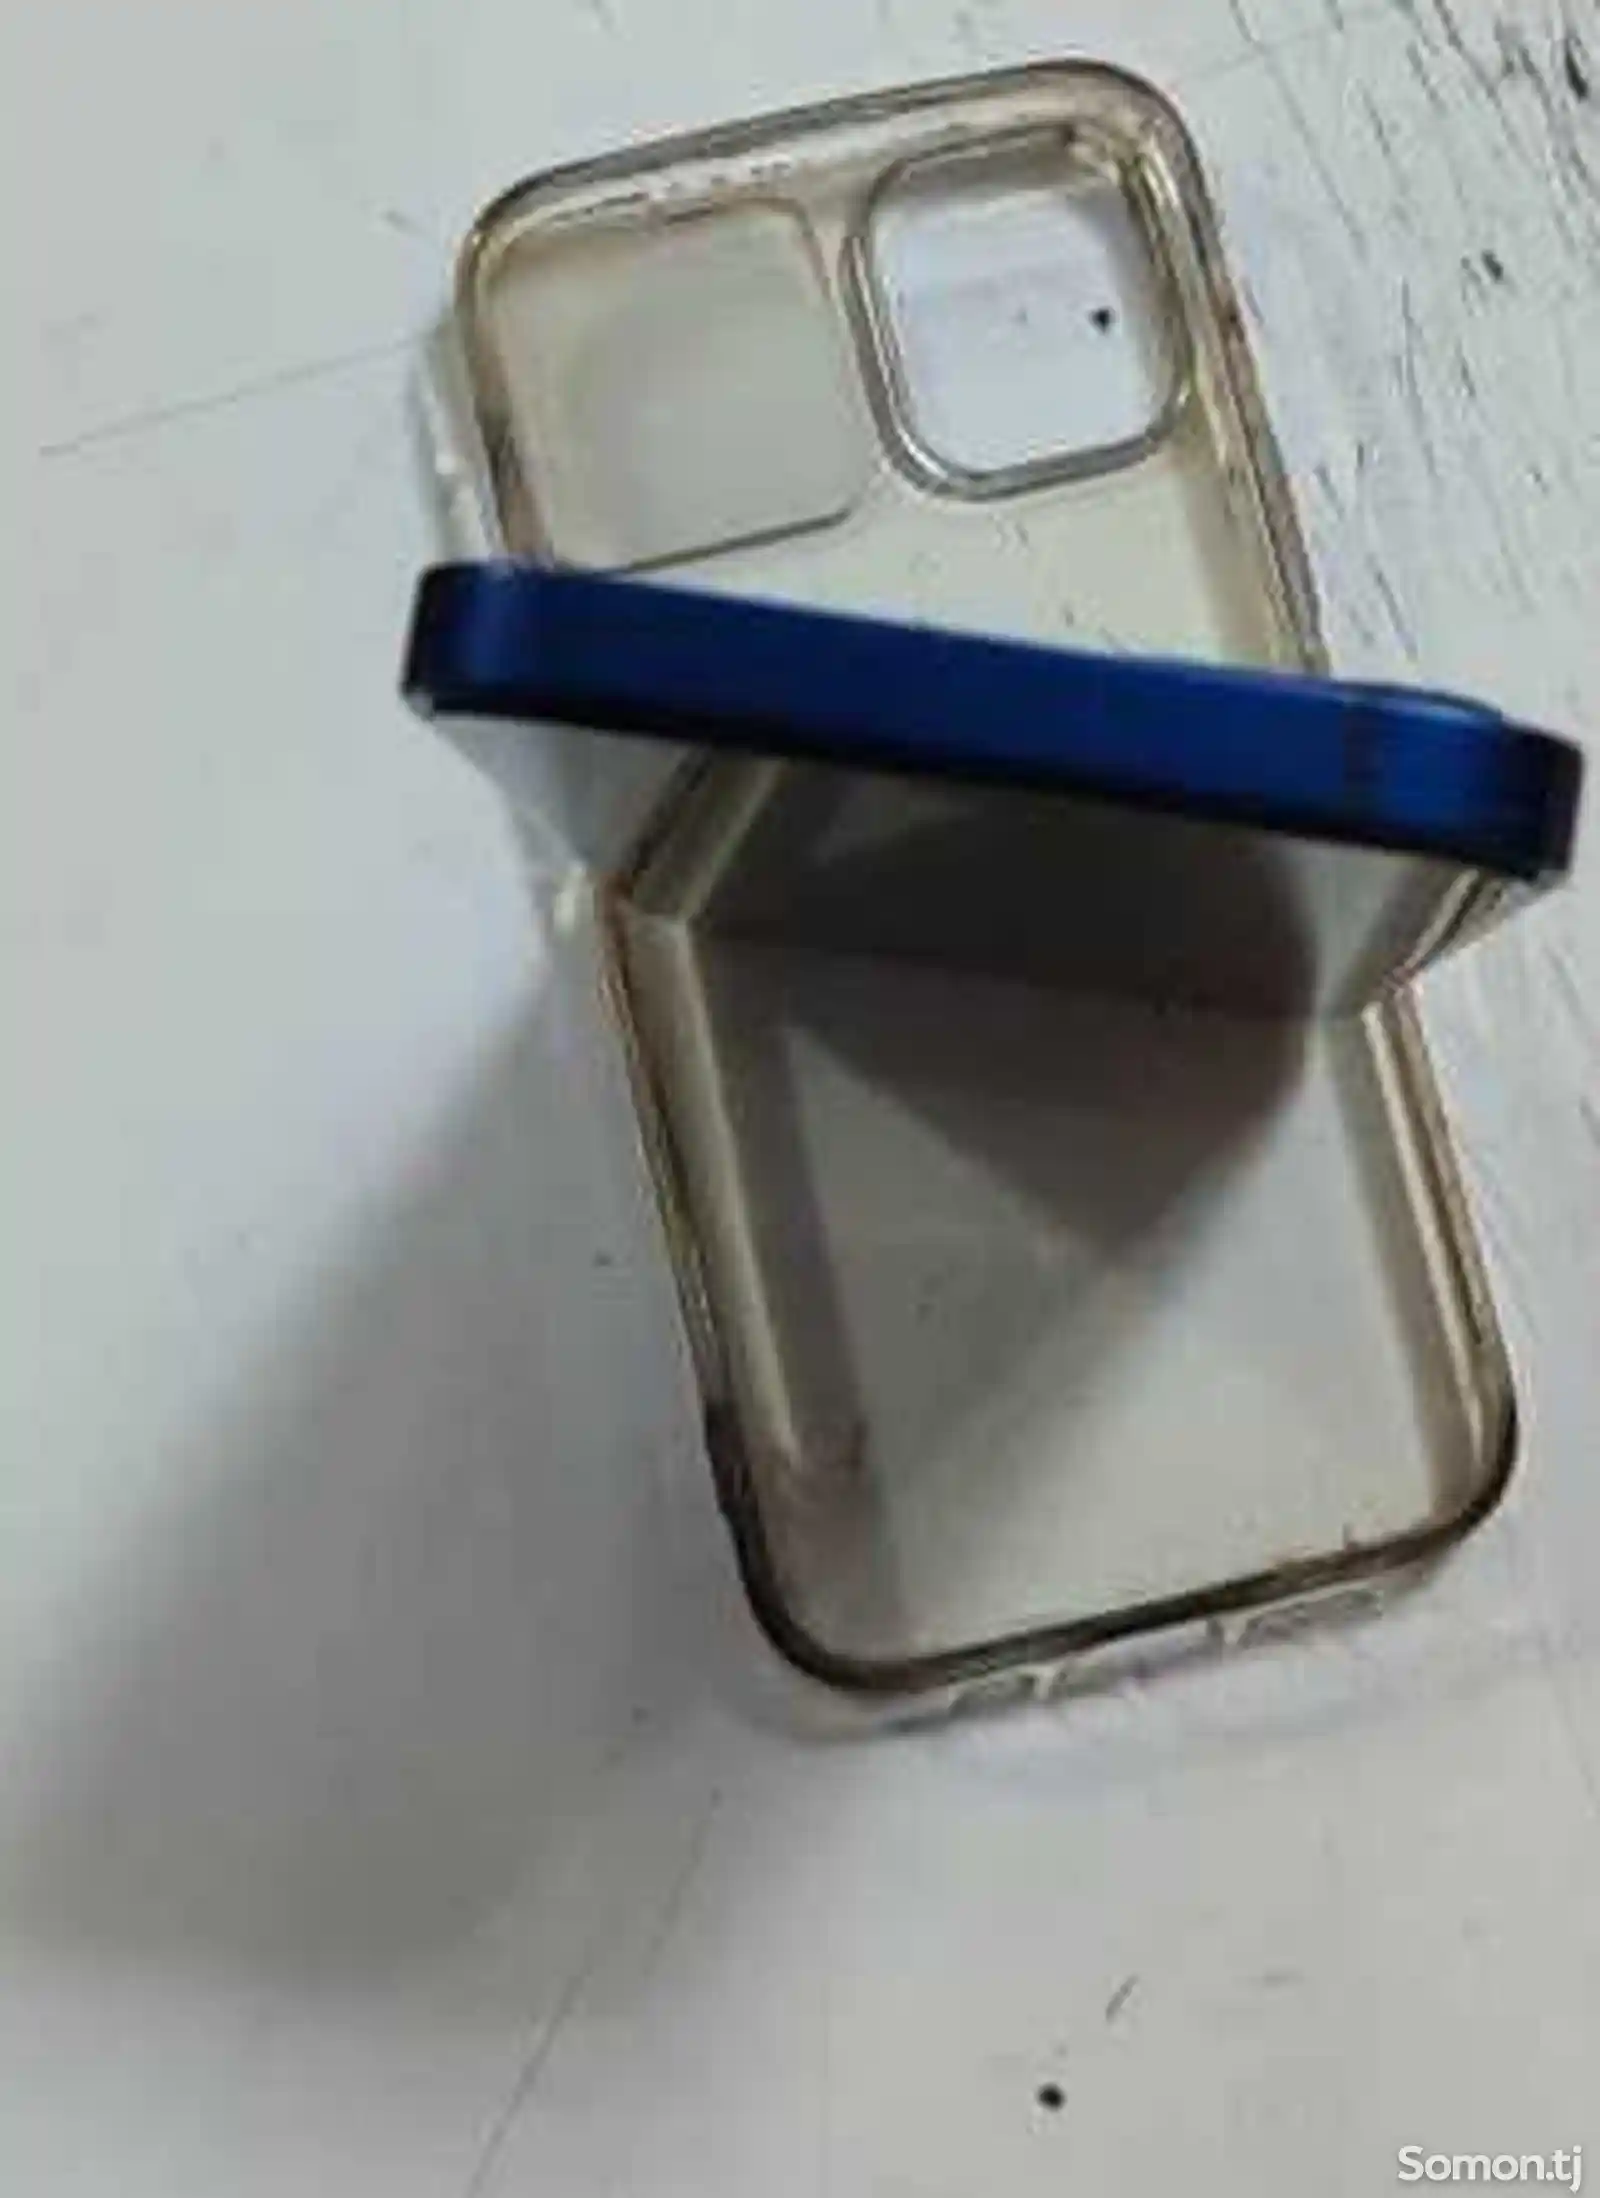 Apple iPhone 12 mini, 256 gb, Blue-6